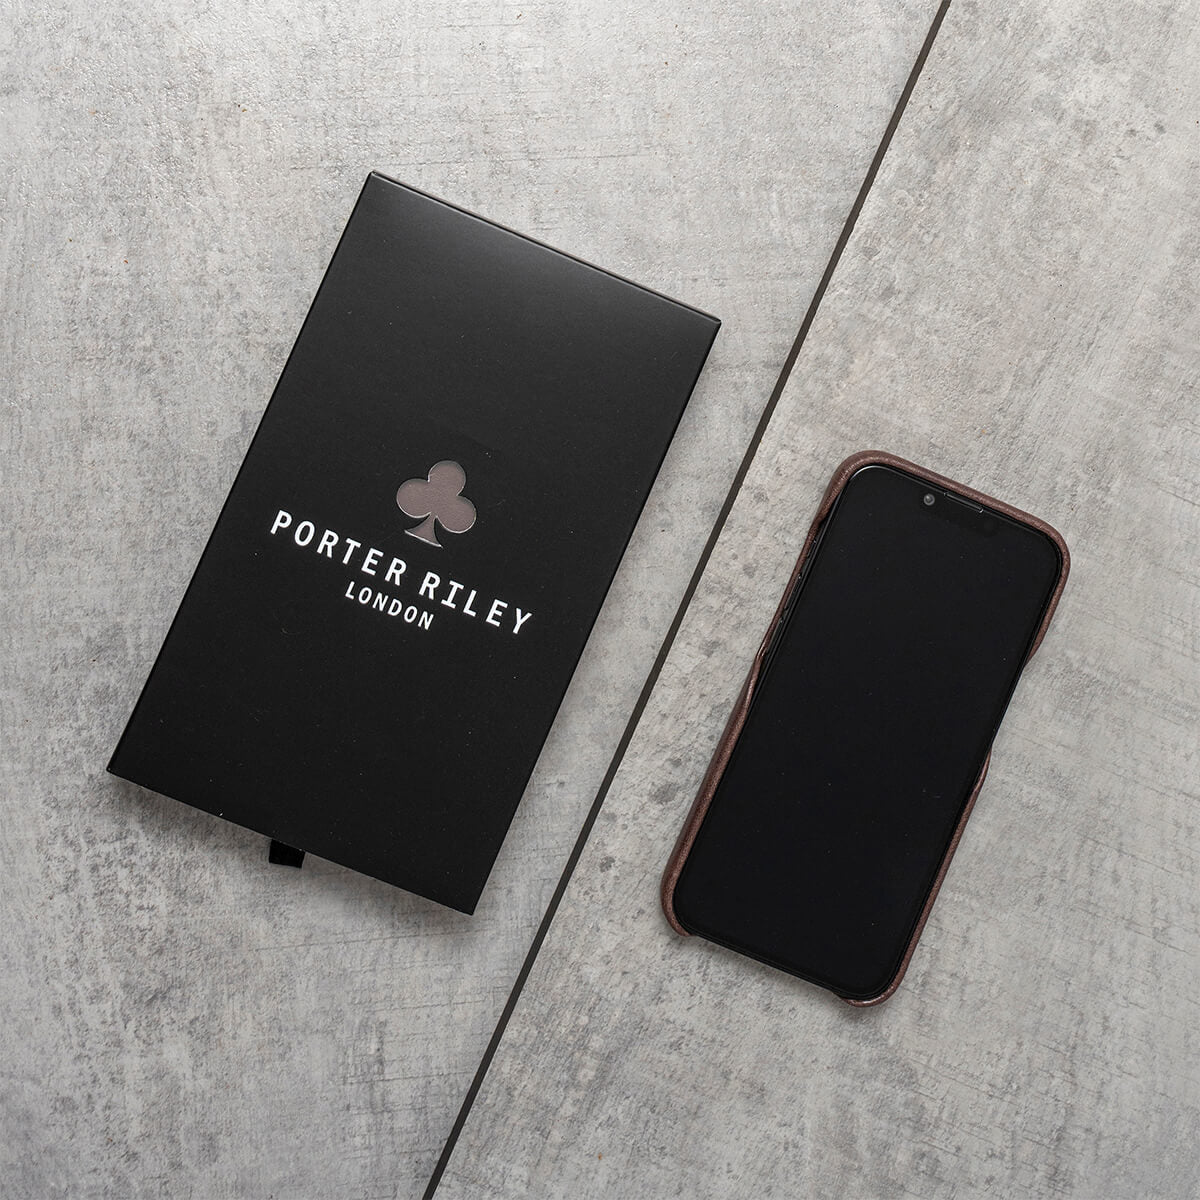 iPhone 12 Pro Leather Case. Premium Slimline Back Genuine Leather Case (Chocolate Brown)